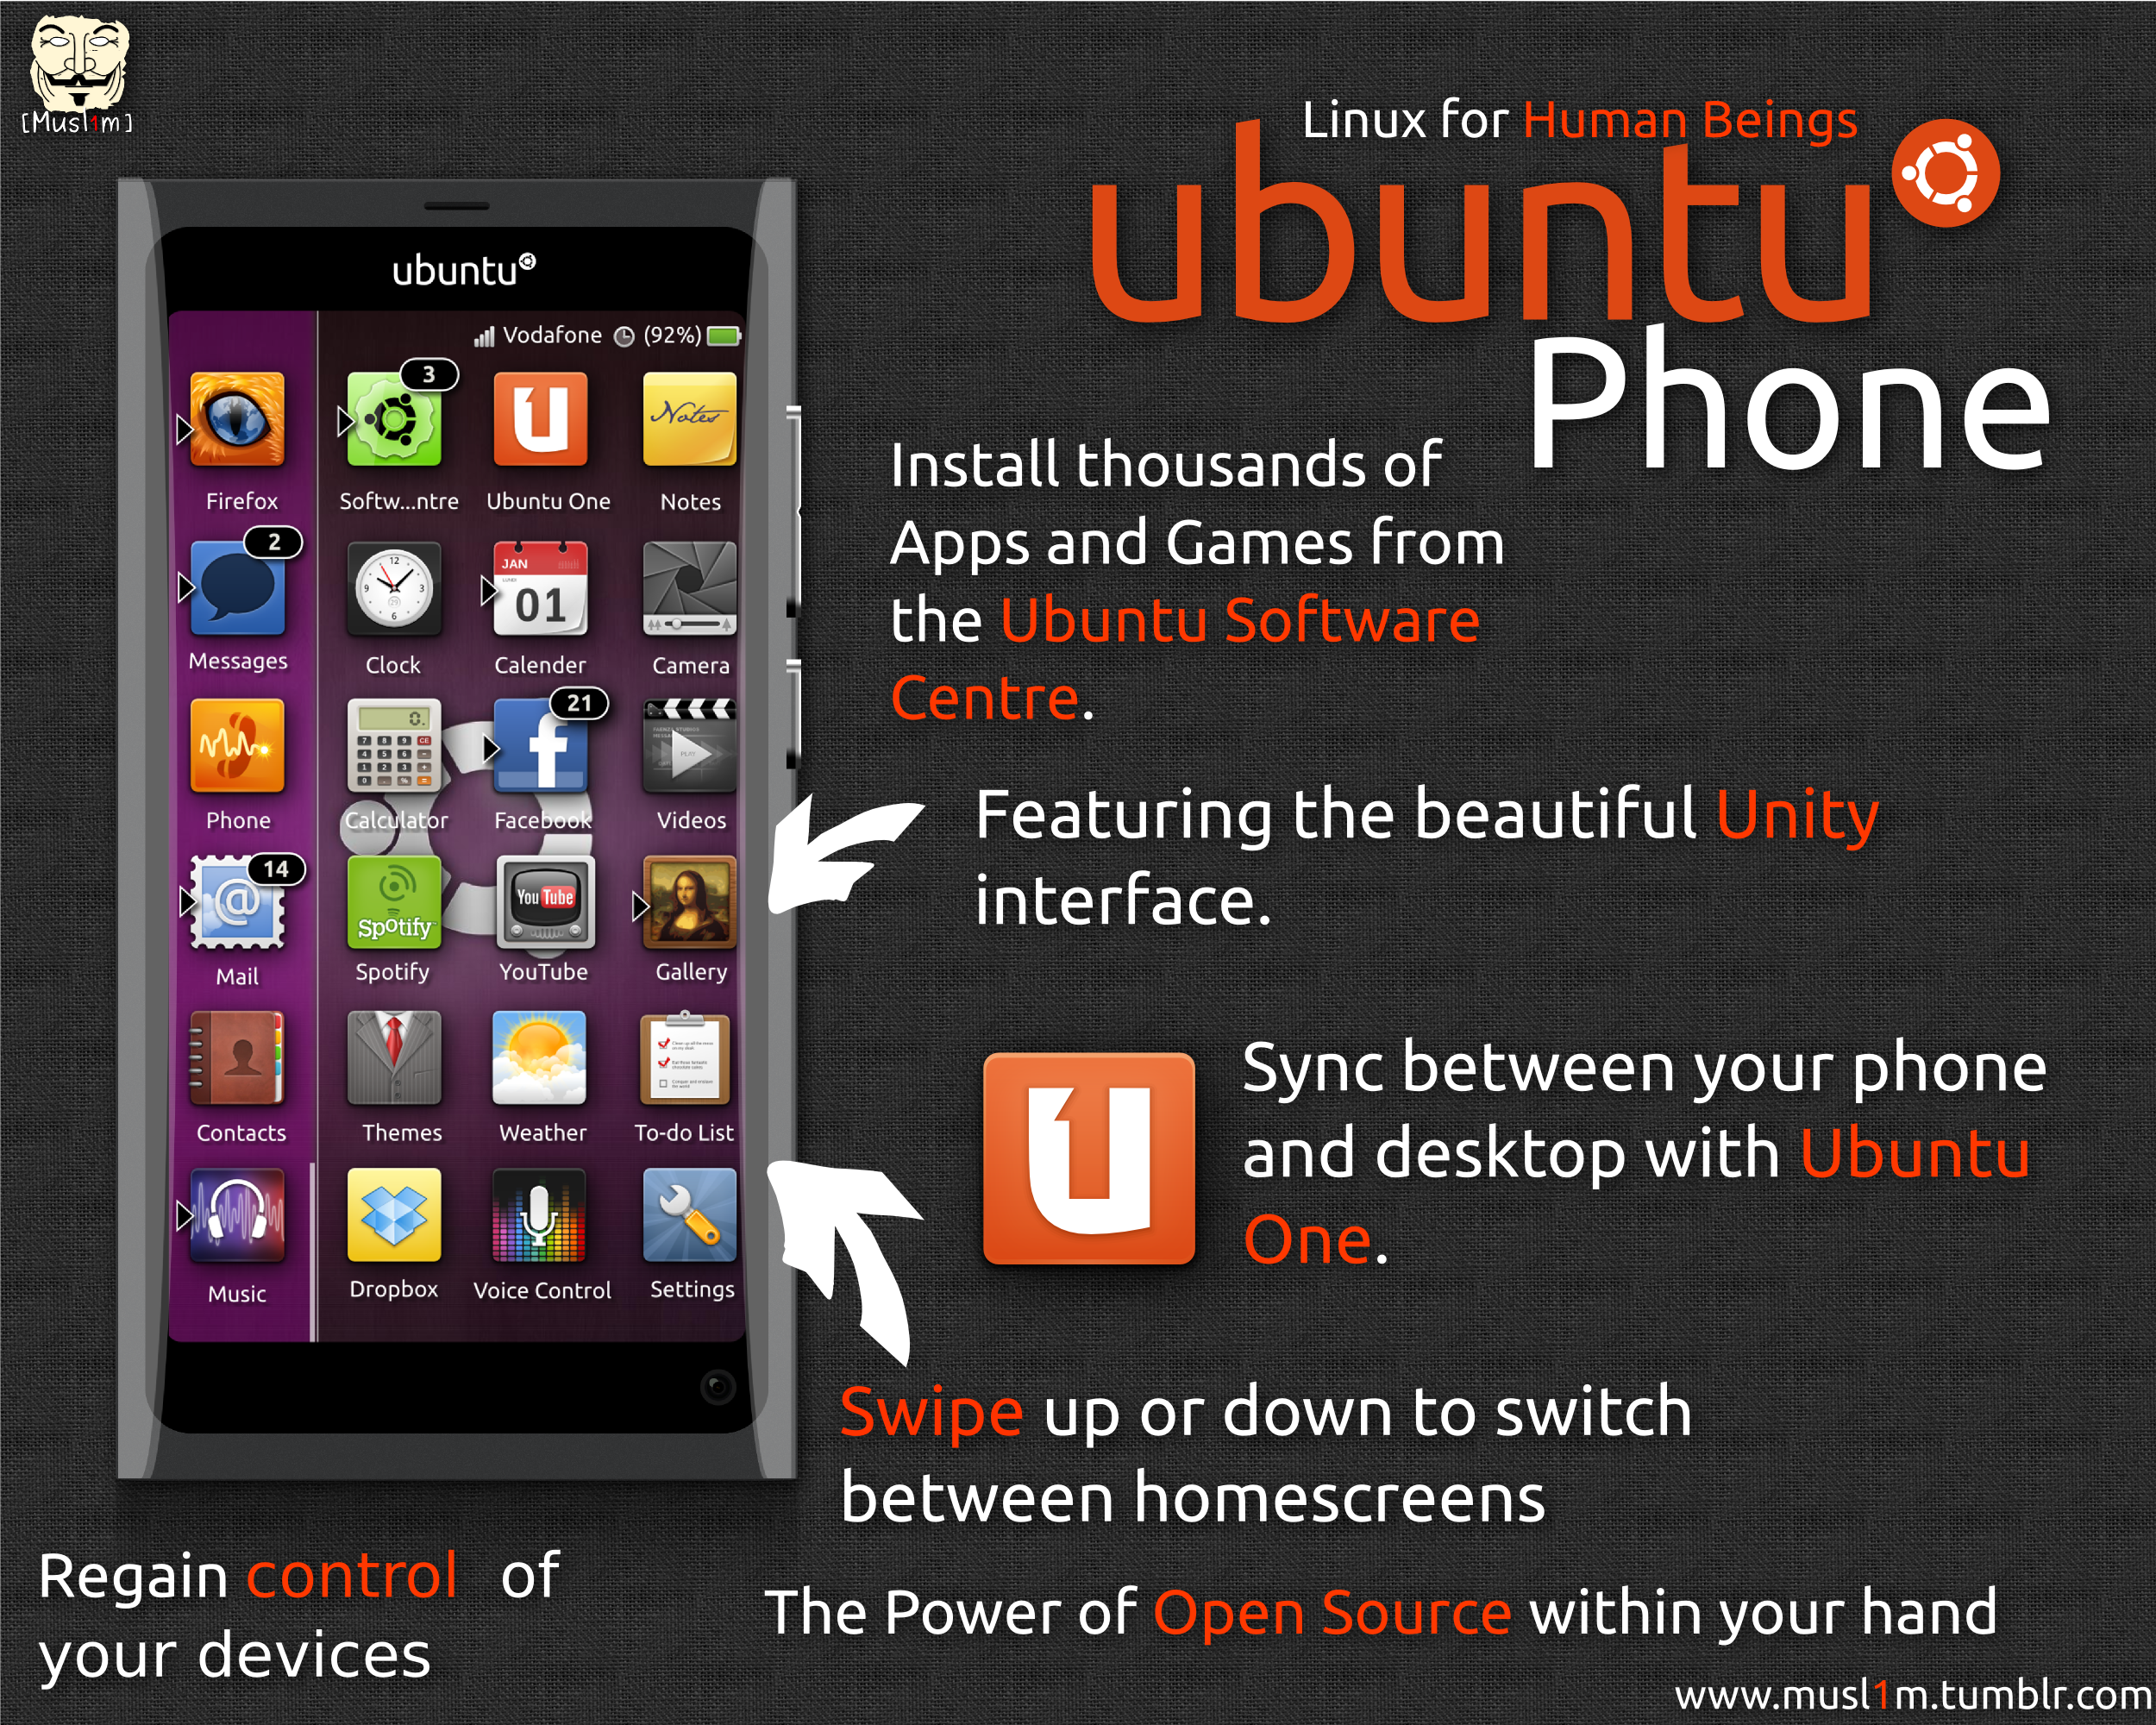 My Ubuntu Phone